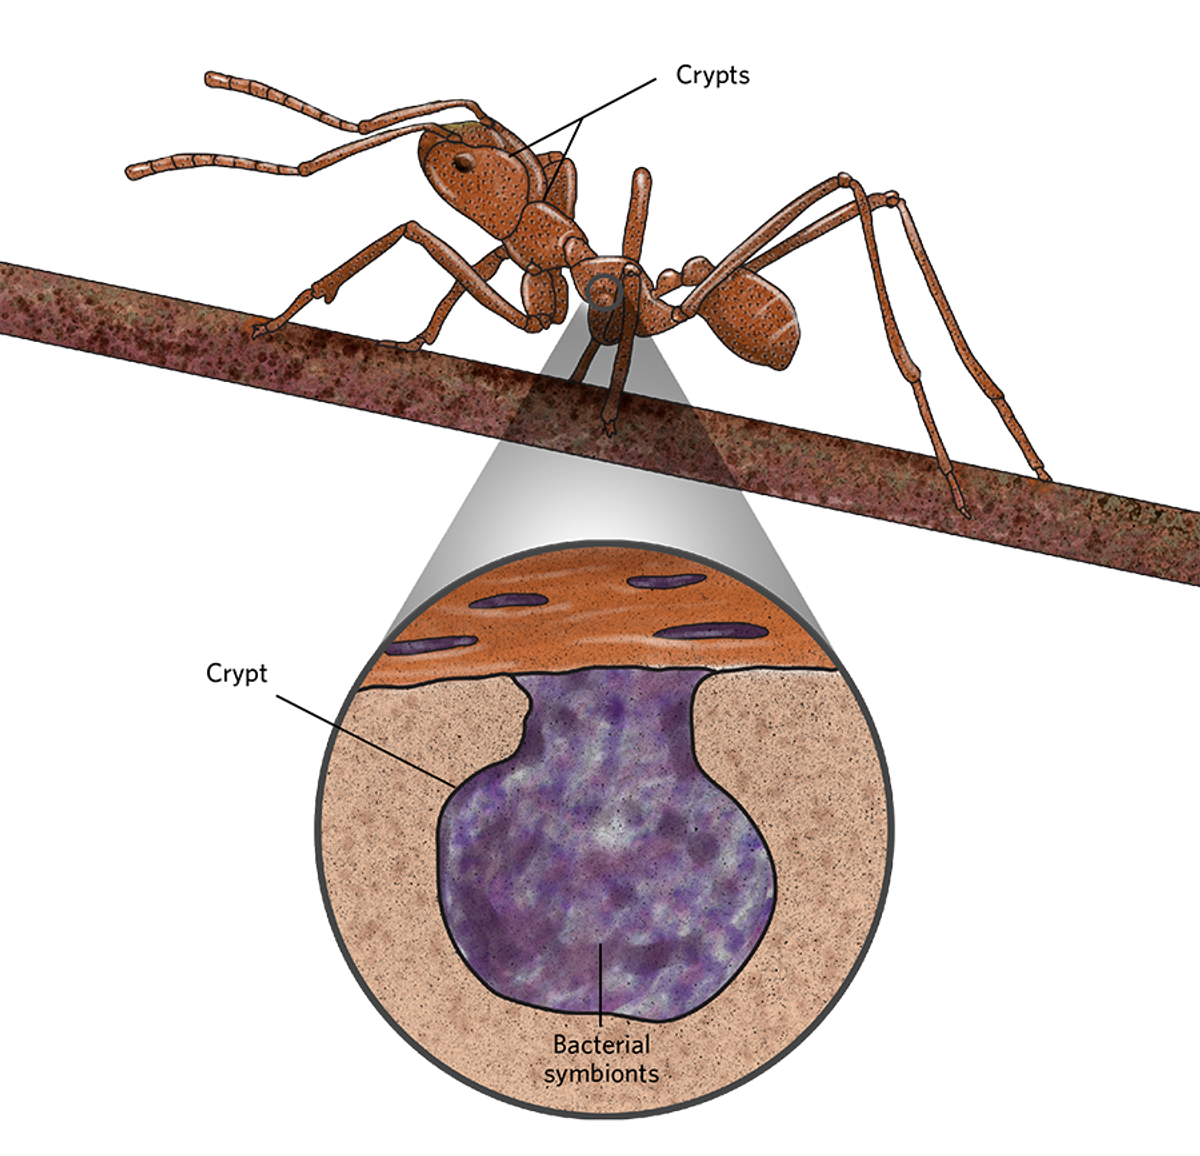 Illustration of an attine ant